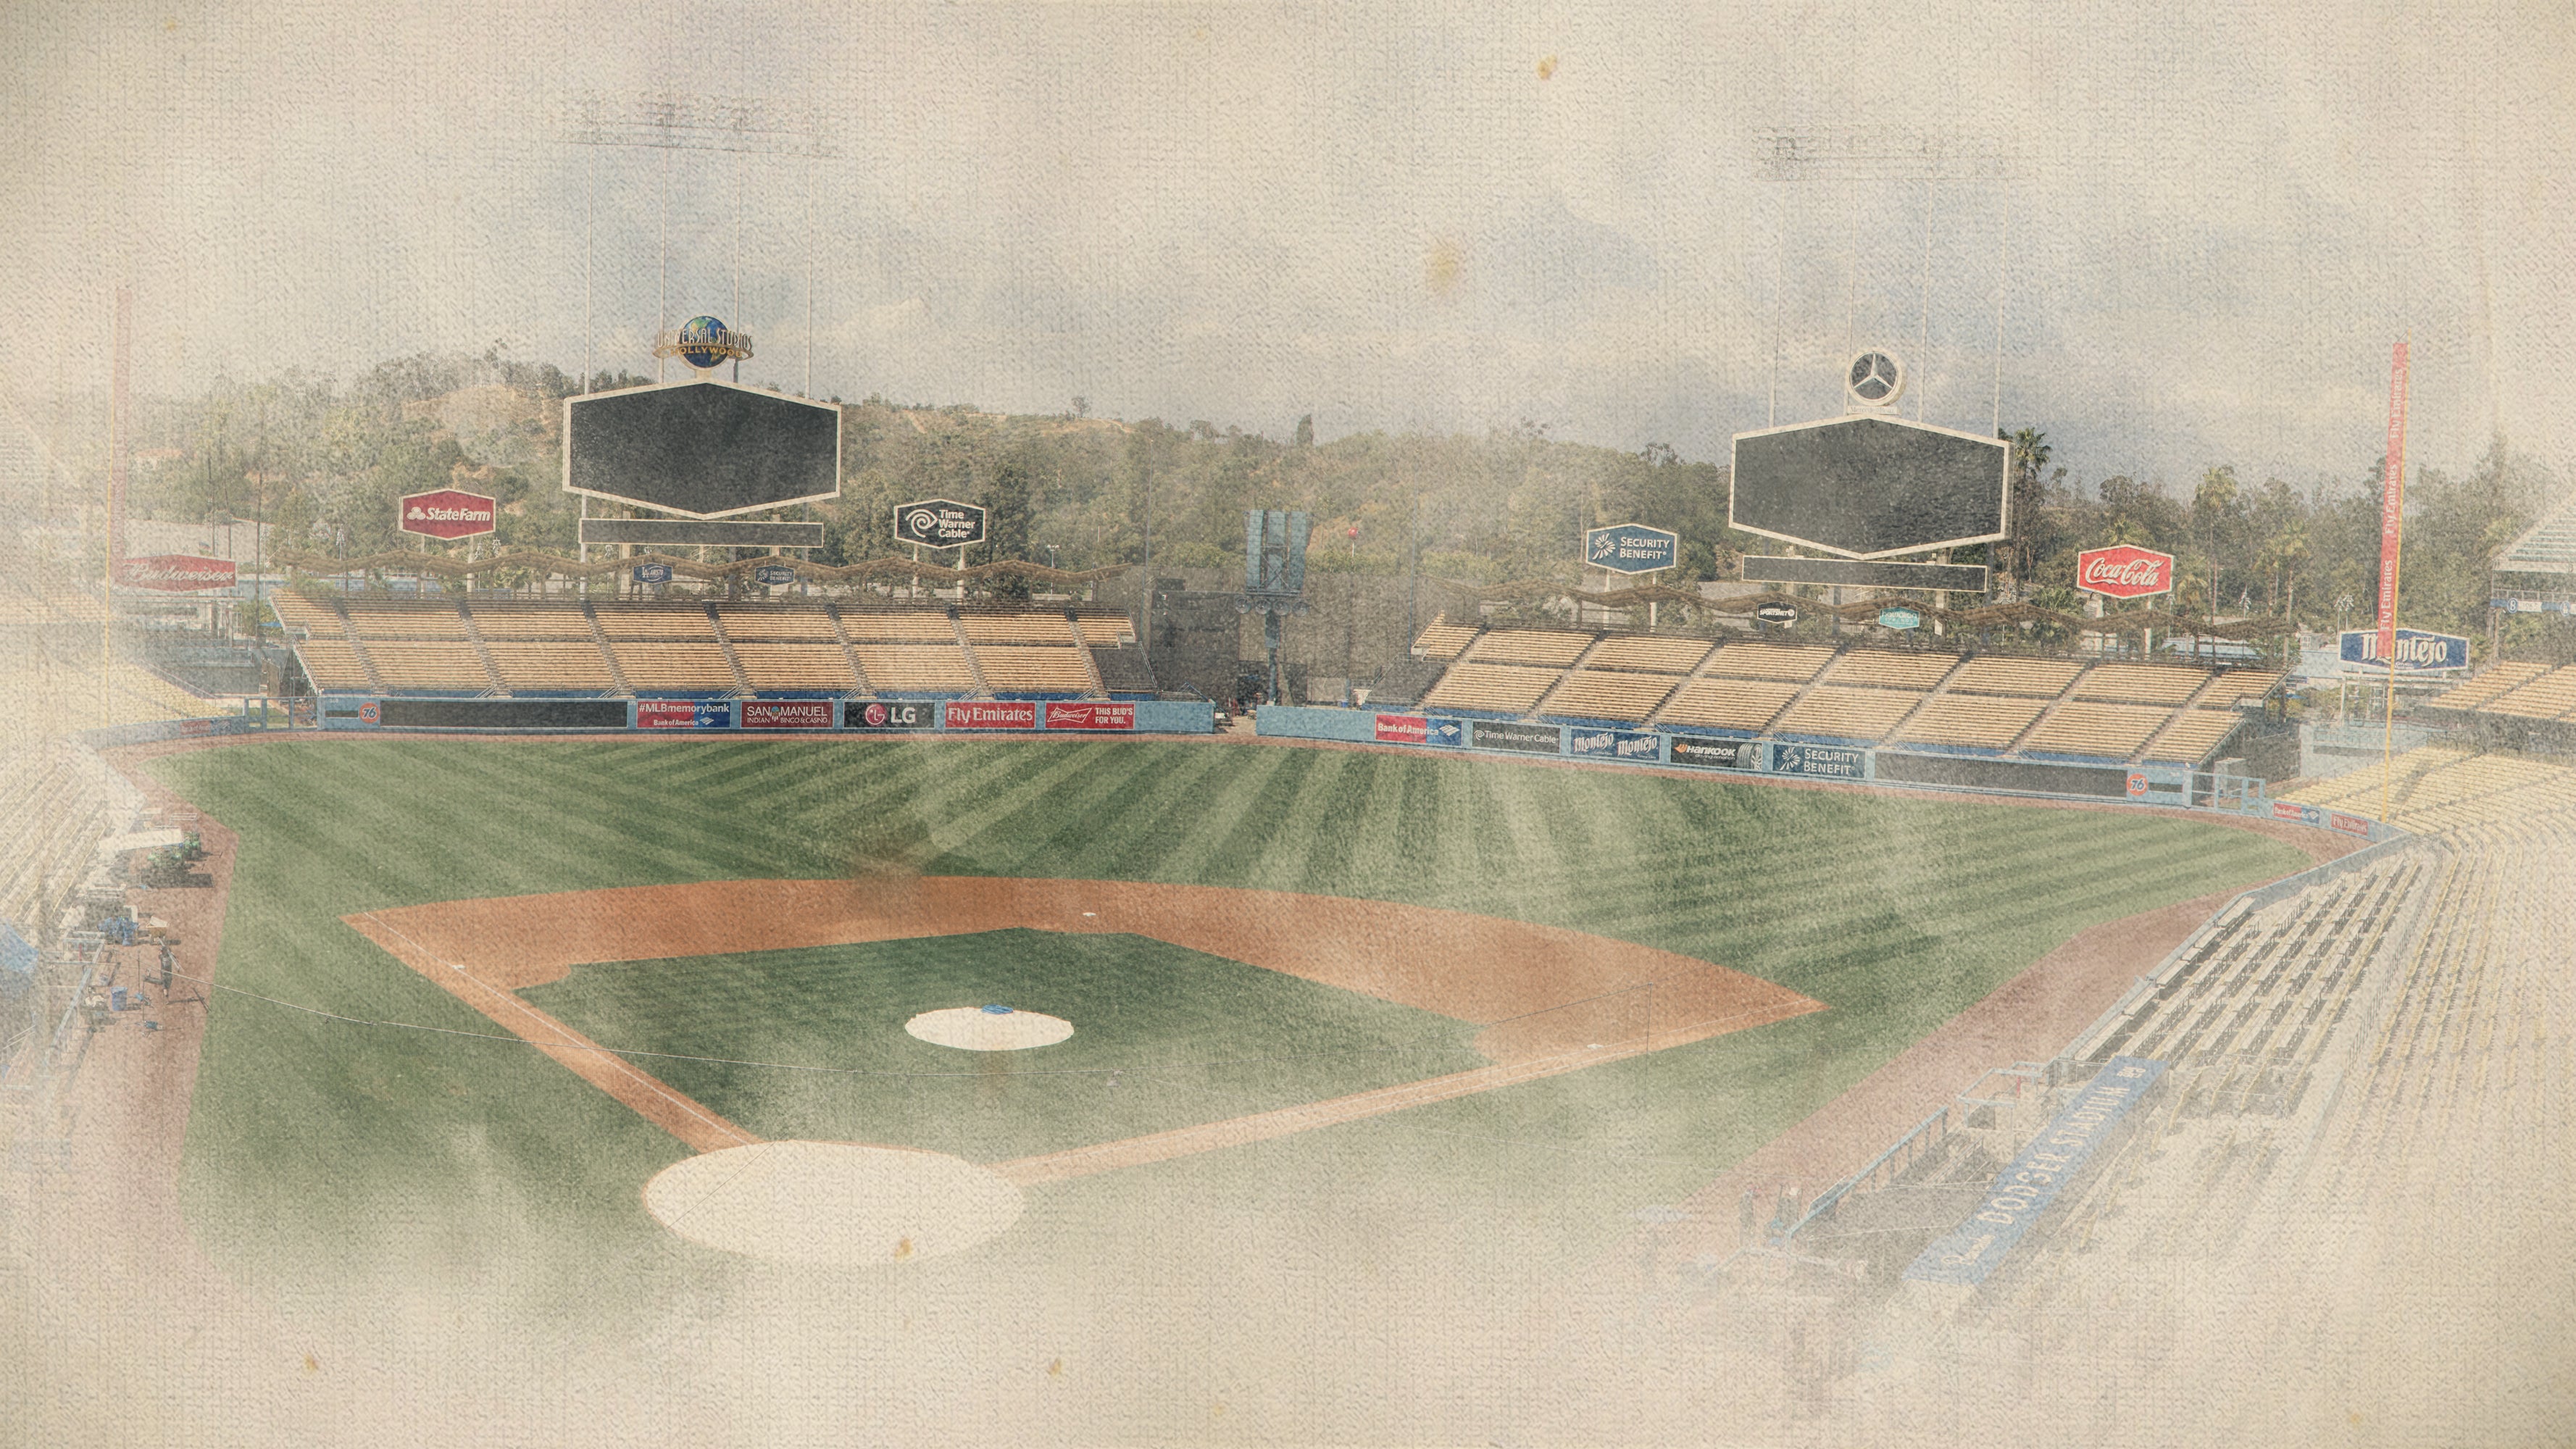 Dodger Stadium Retro Desktop Wallpaper (As requested)